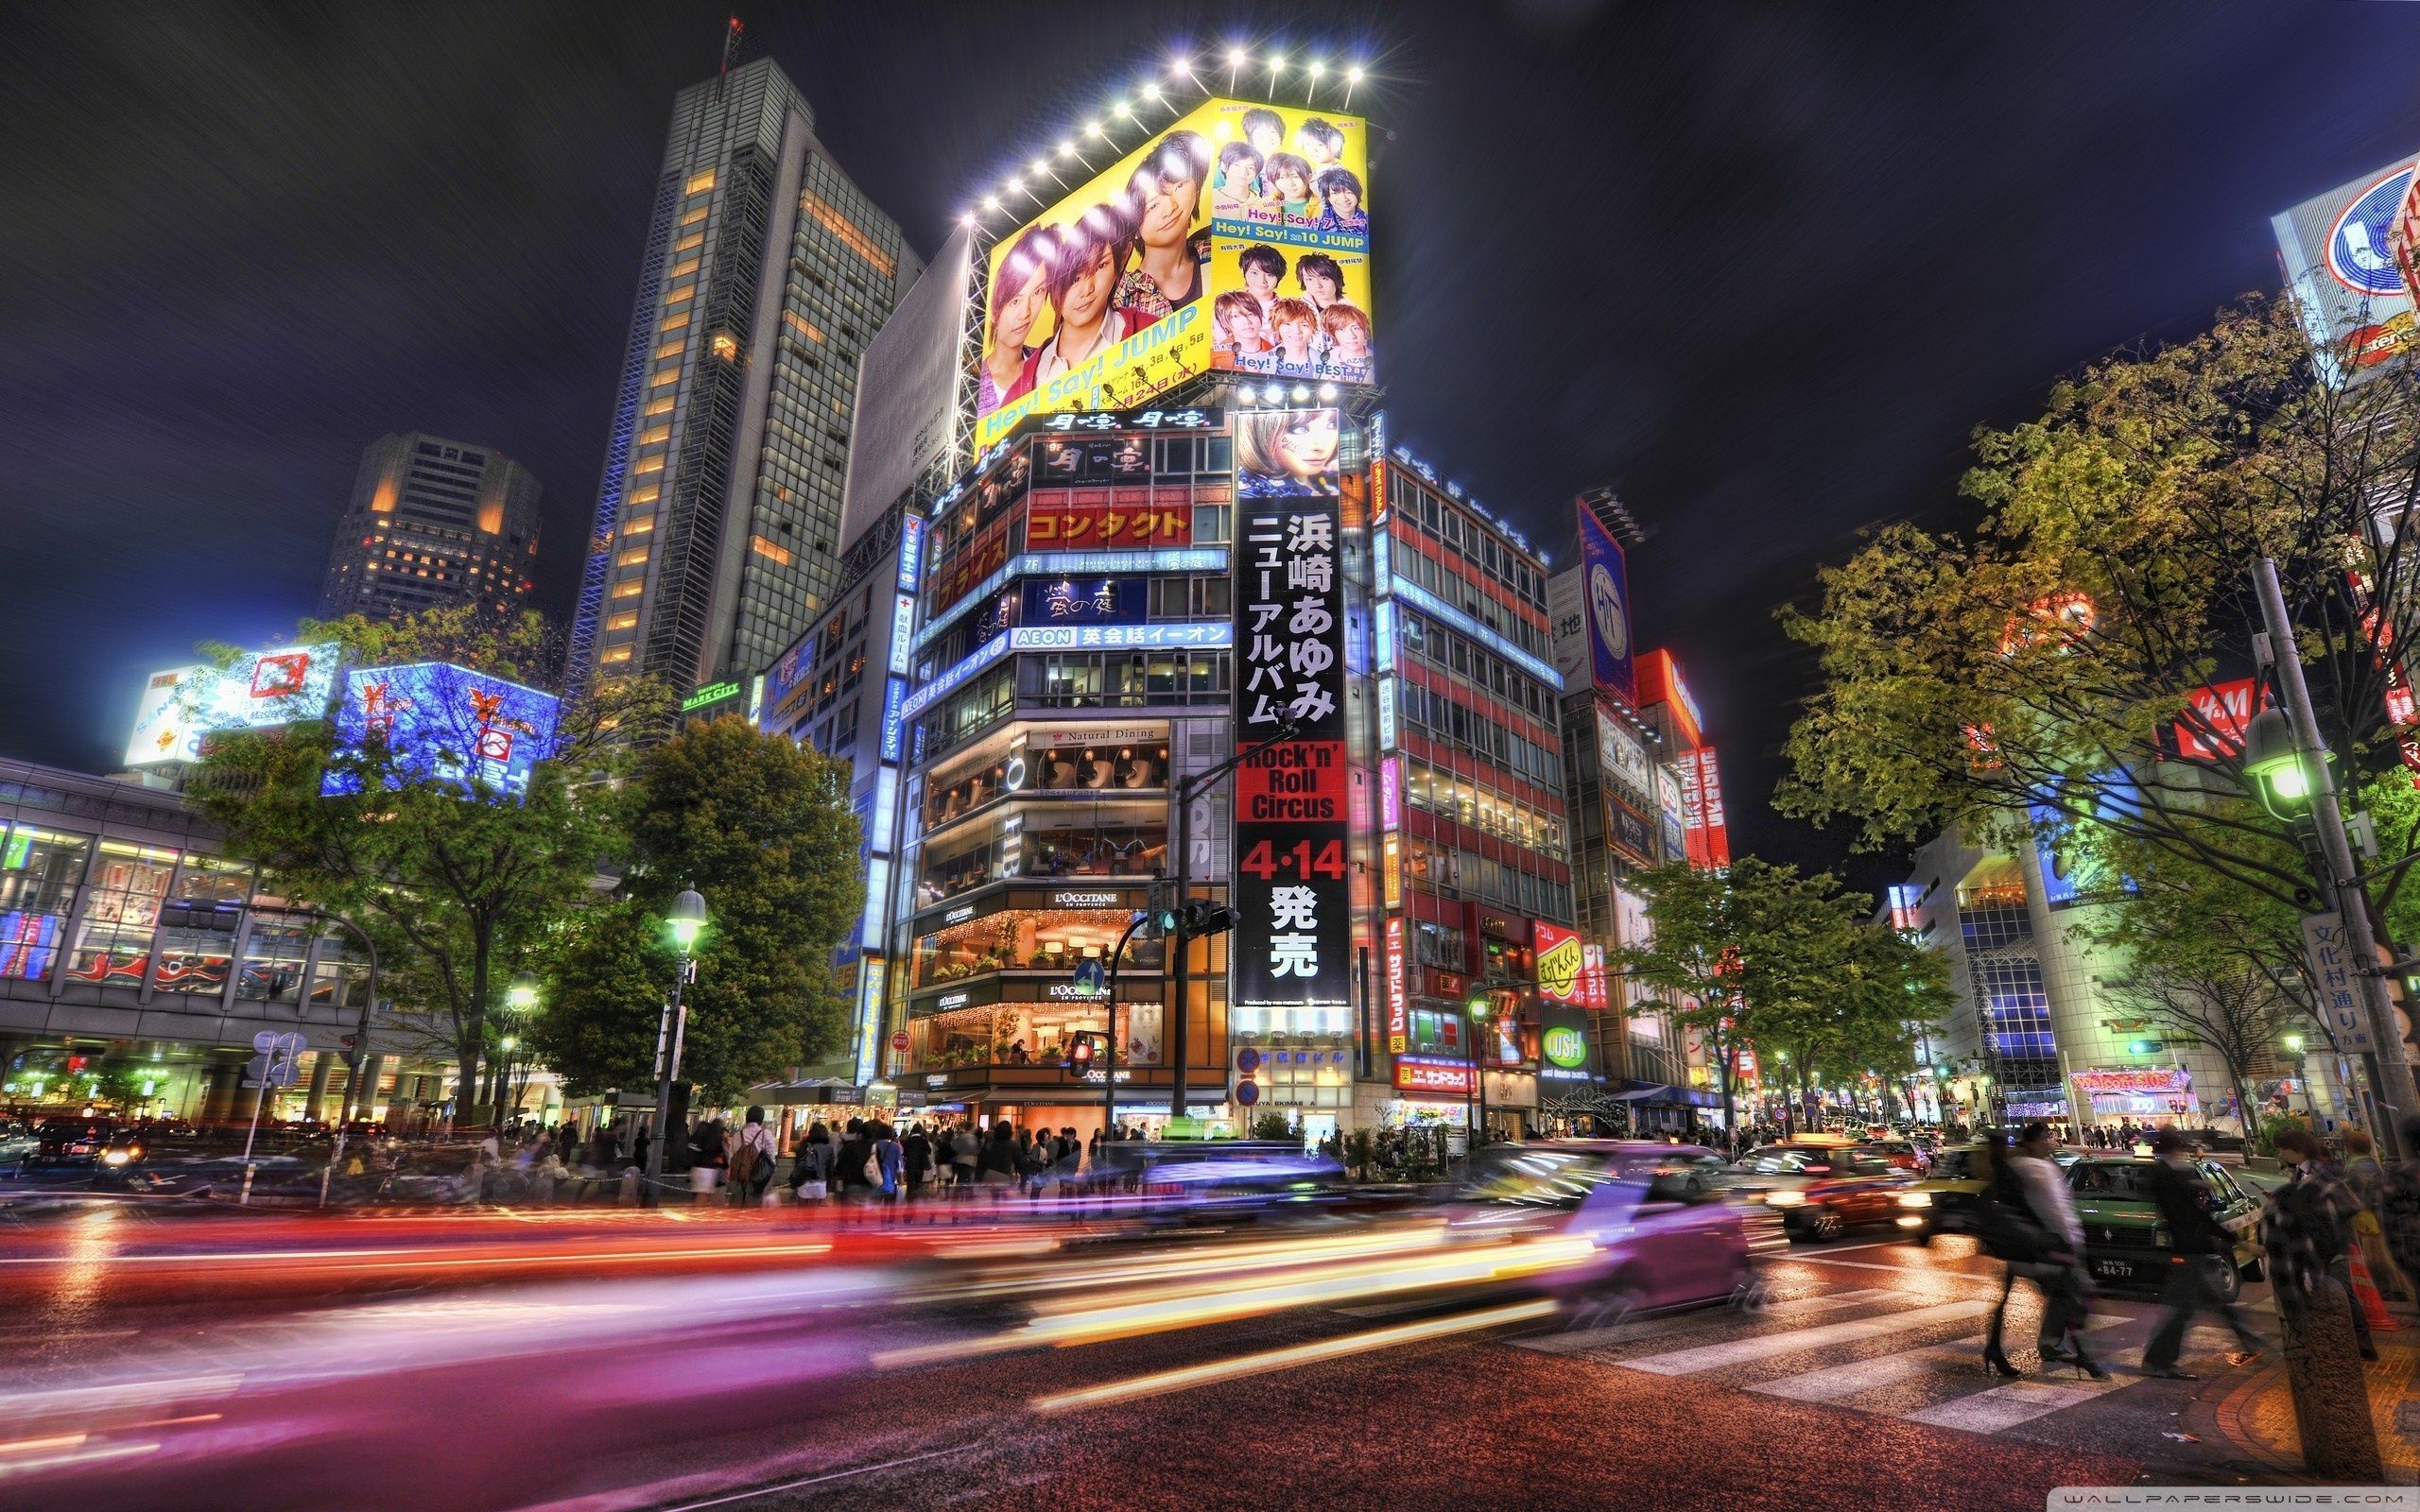 Fonds d'écran Tokyo : tous les wallpapers Tokyo